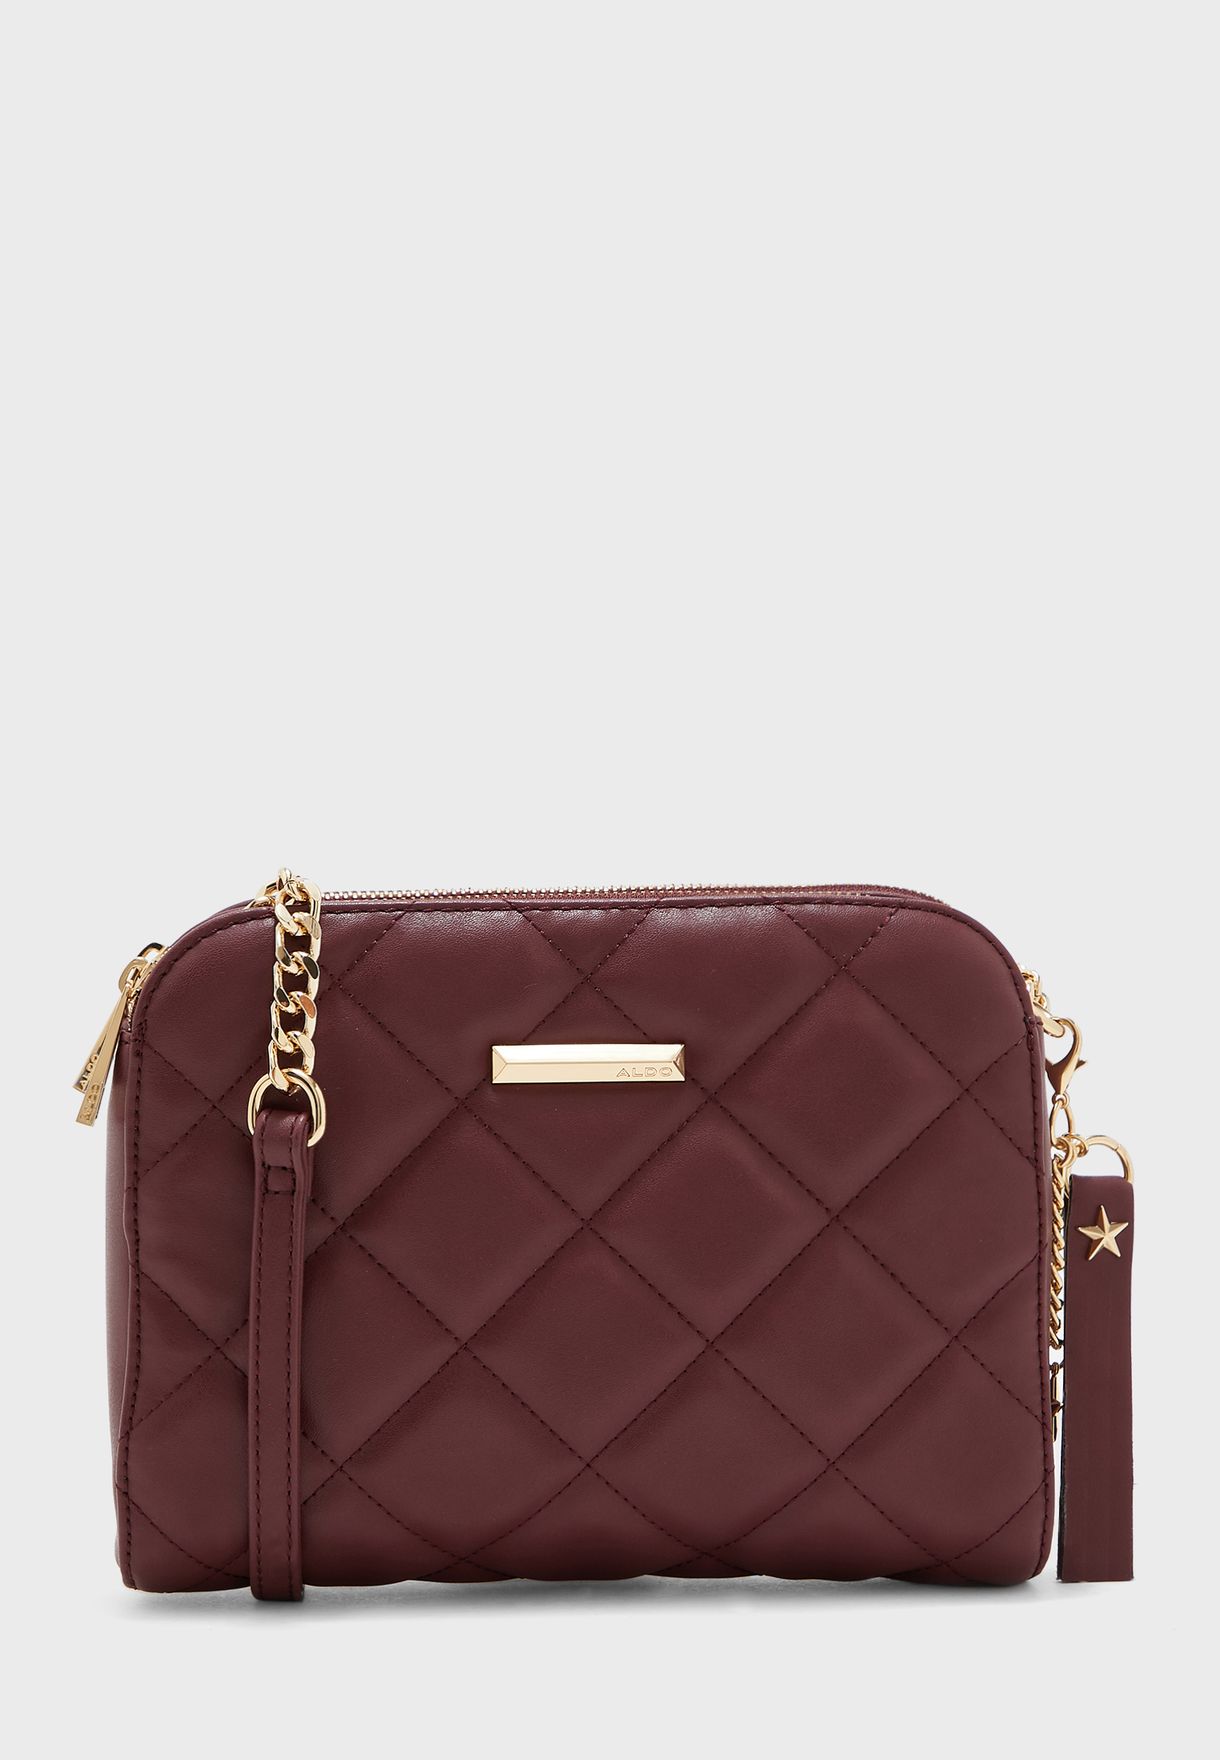 aldo burgundy purse